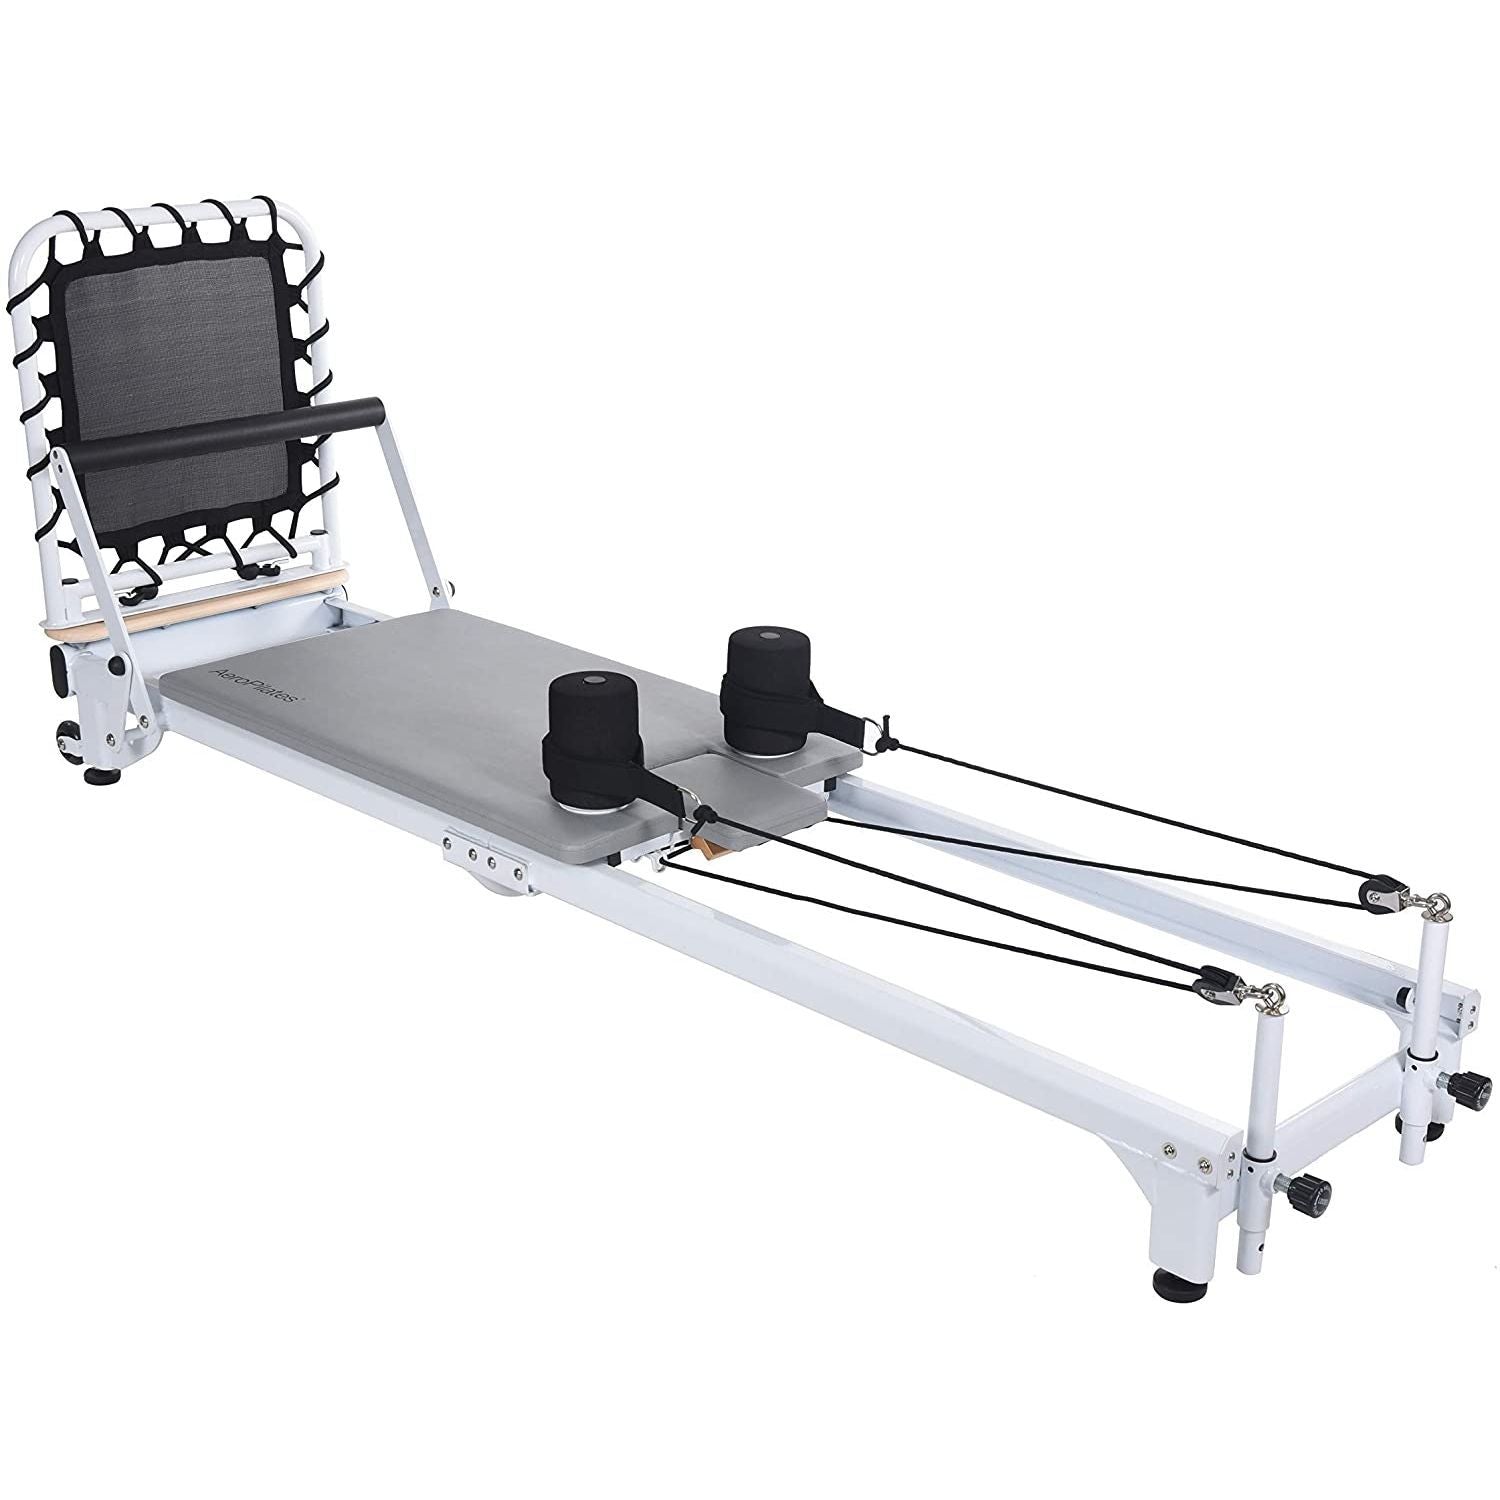 Aero Pilates Premier 700 Foldable Reformer Machine with Cardio